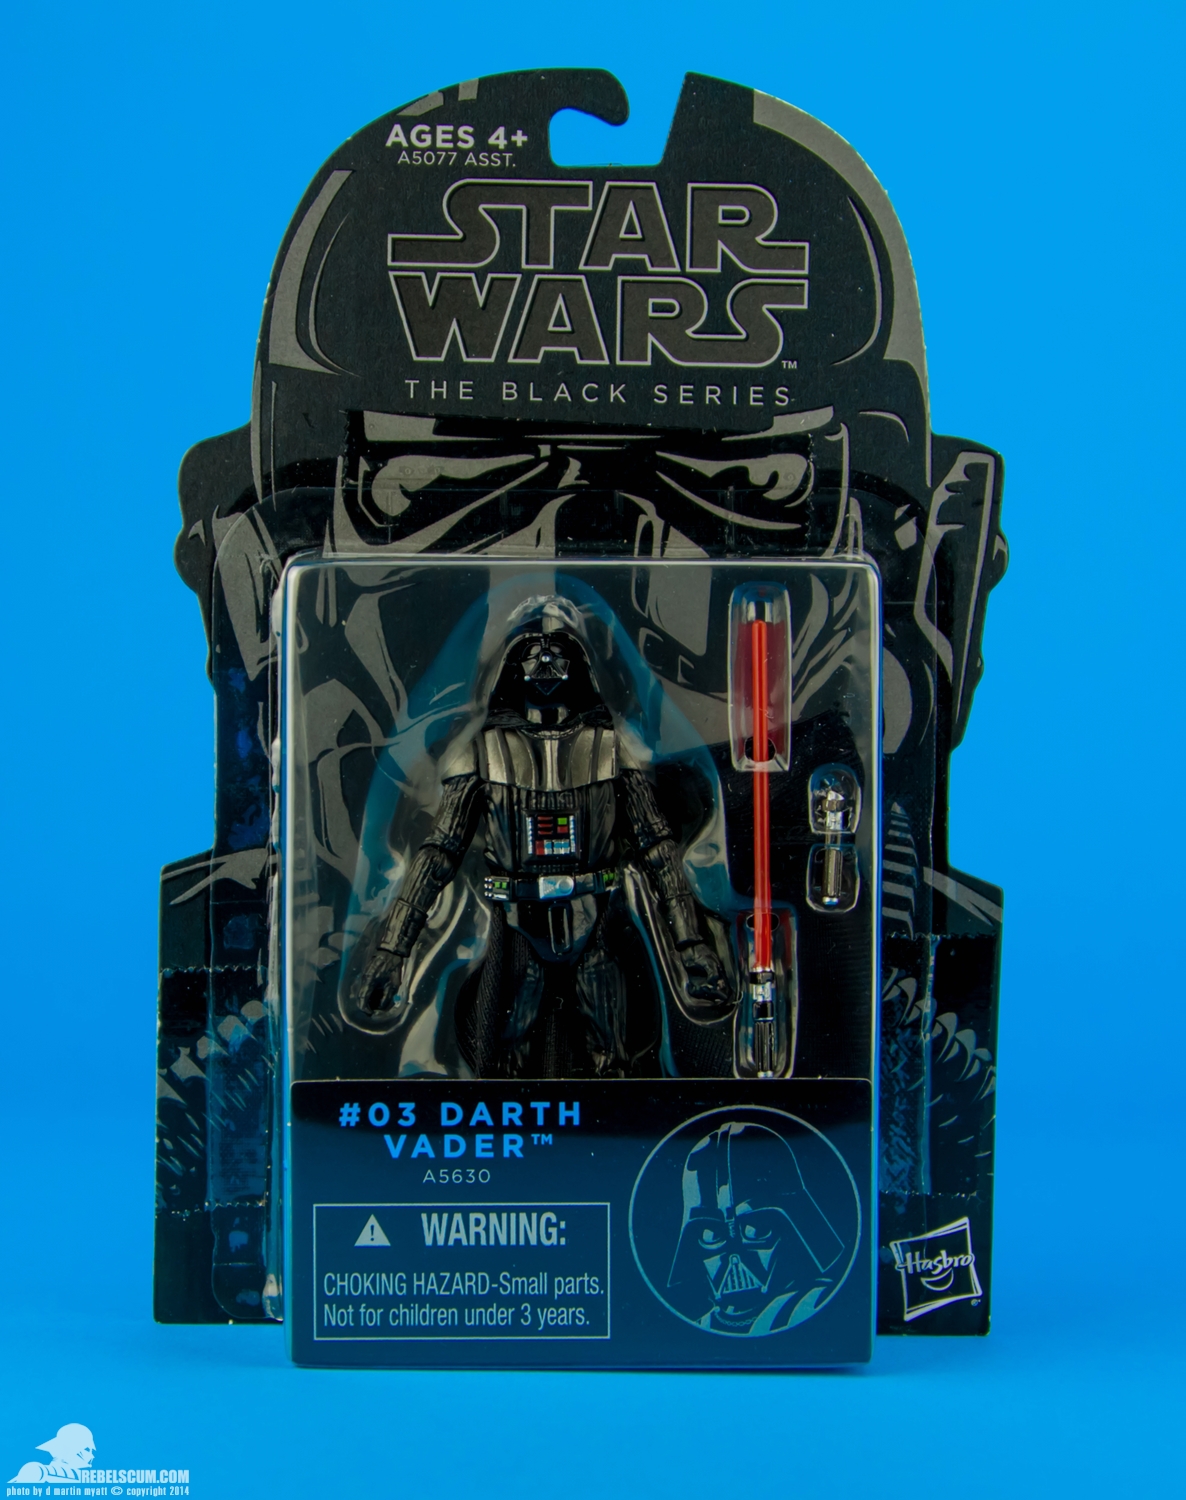 The-Black-Series-Blue-03-Darth-Vader-A5077-A5630-Star-Wars-016.jpg